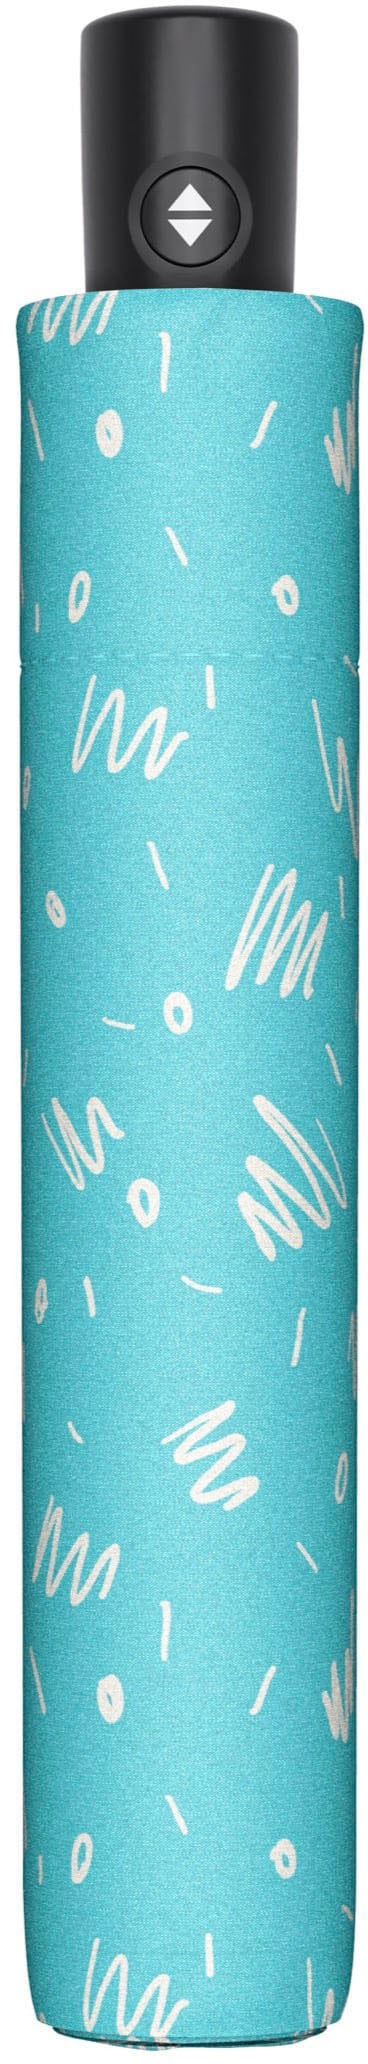 Taschenregenschirm Magic aqua »zero kaufen Minimally, online blue« I\'m | doppler® walking